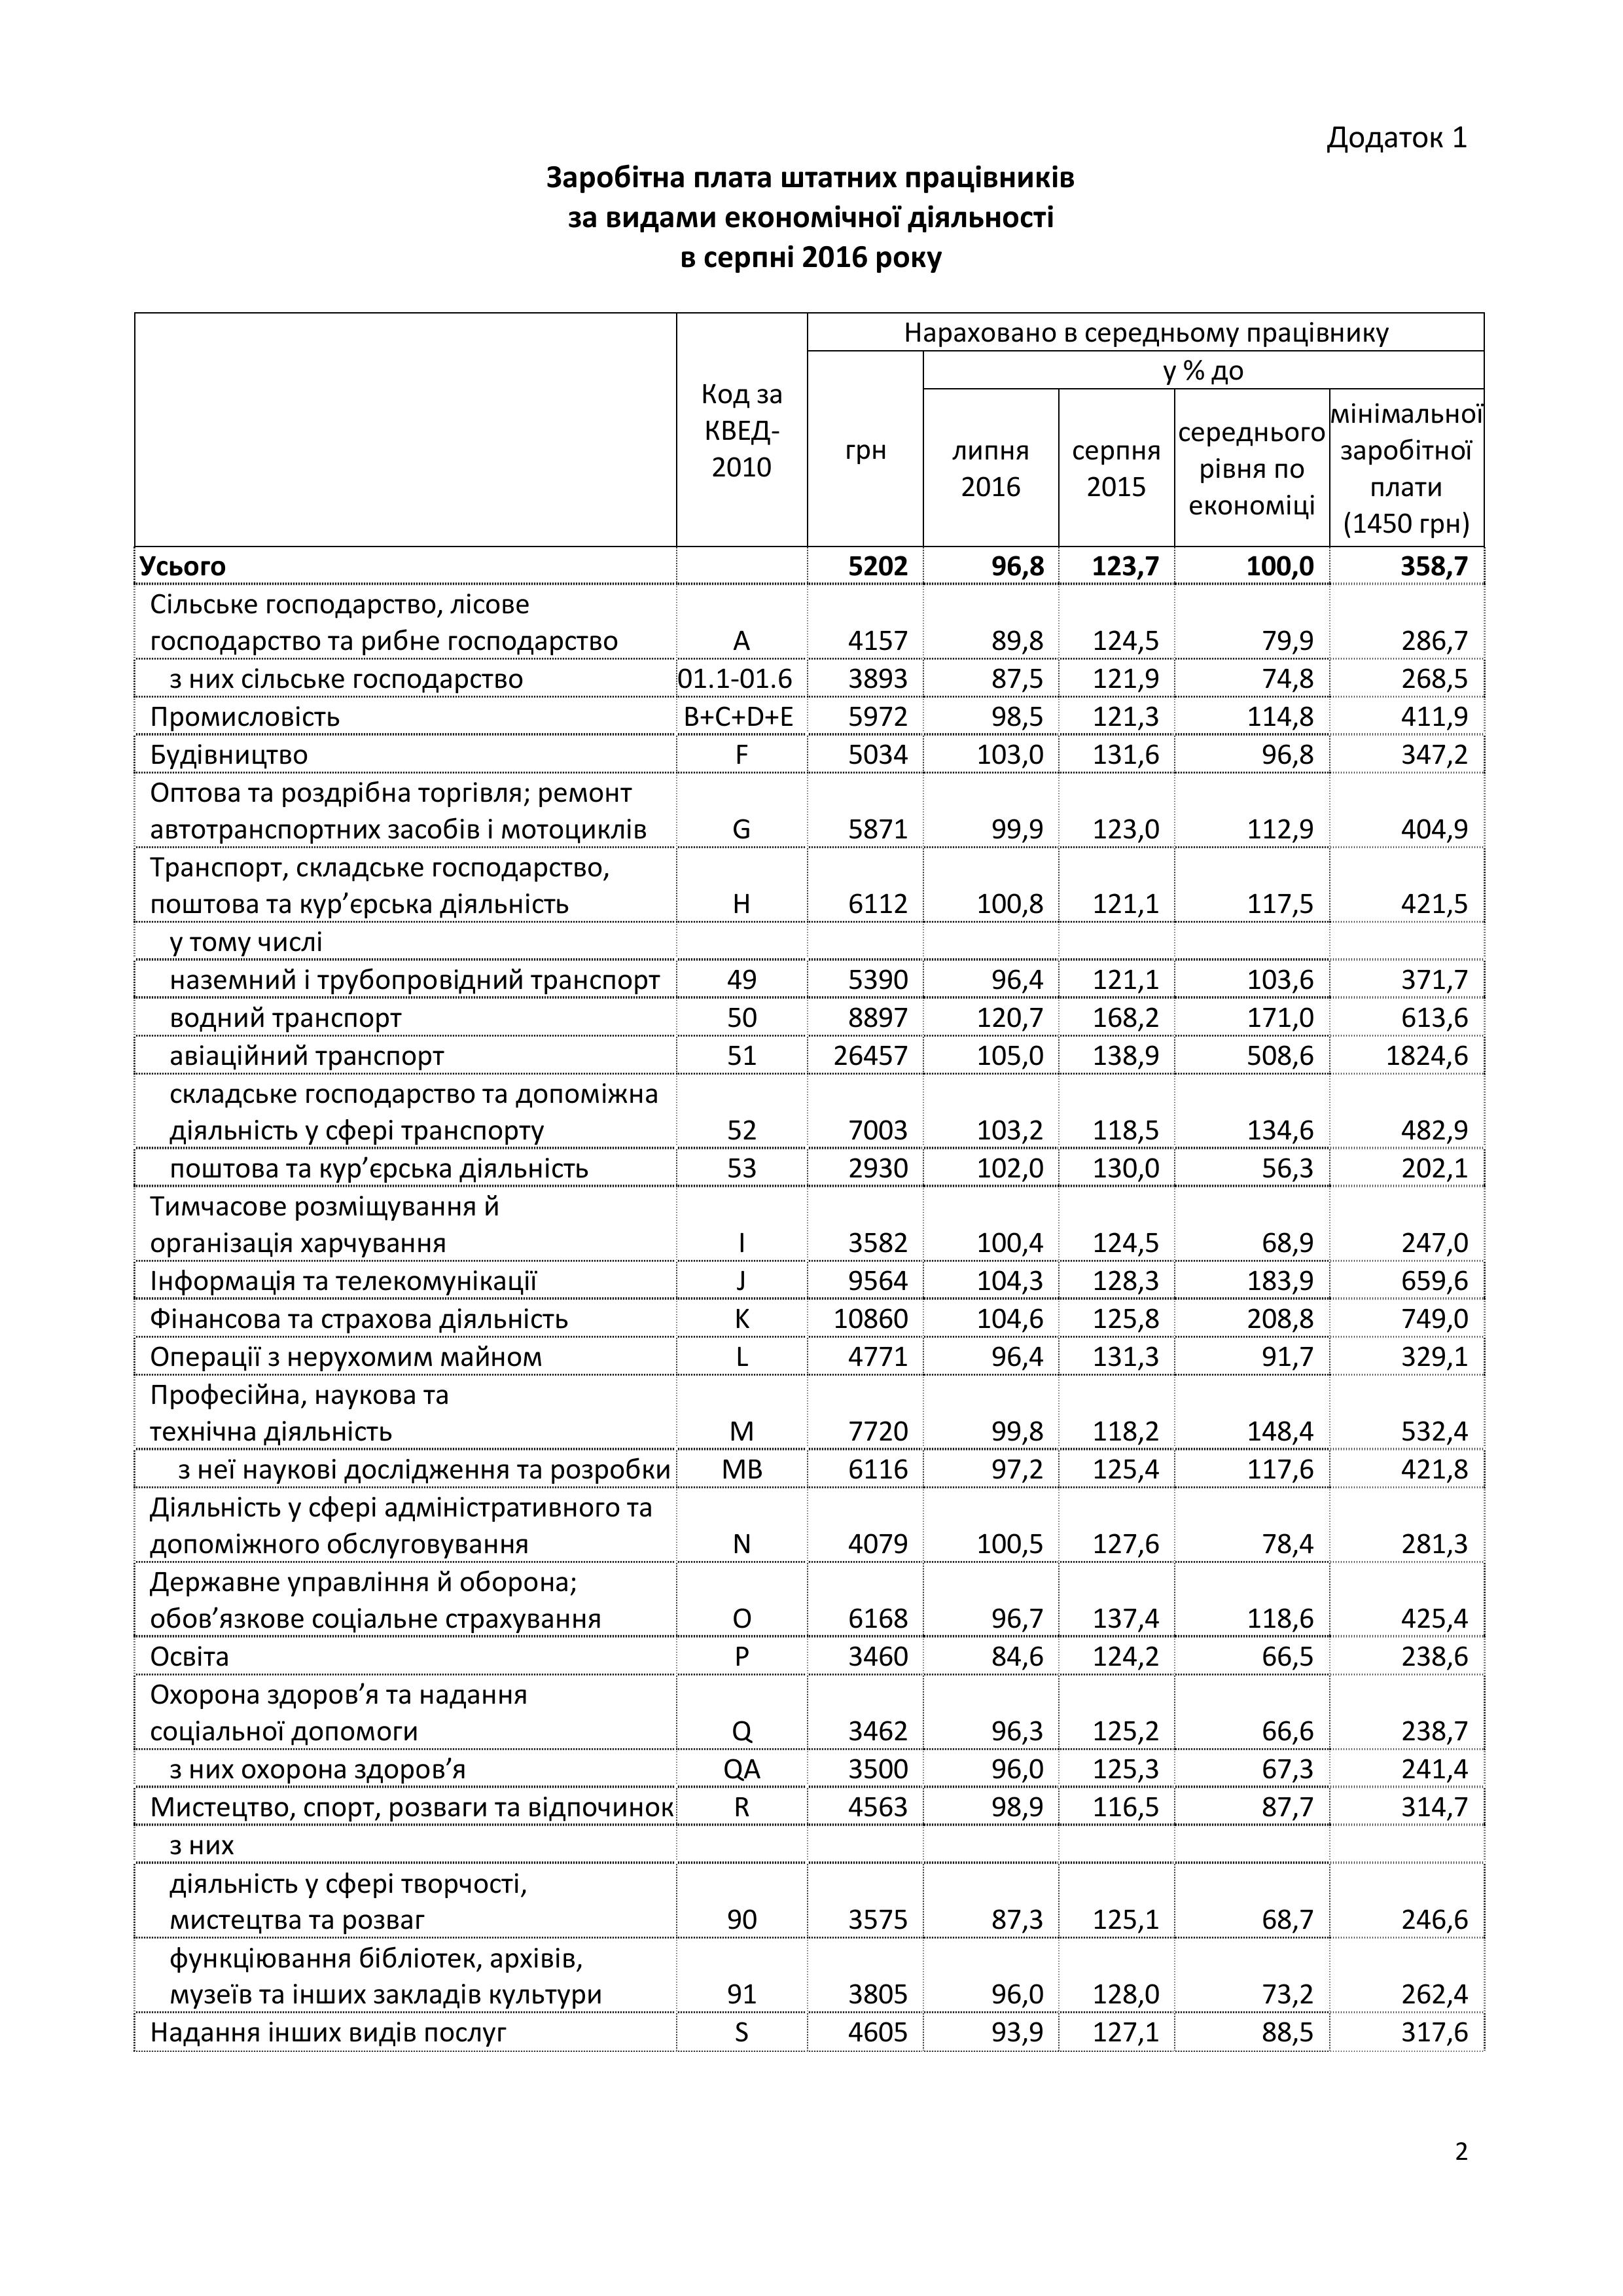 Реальна зарплата українців за рік зросла на 15% - фото 2